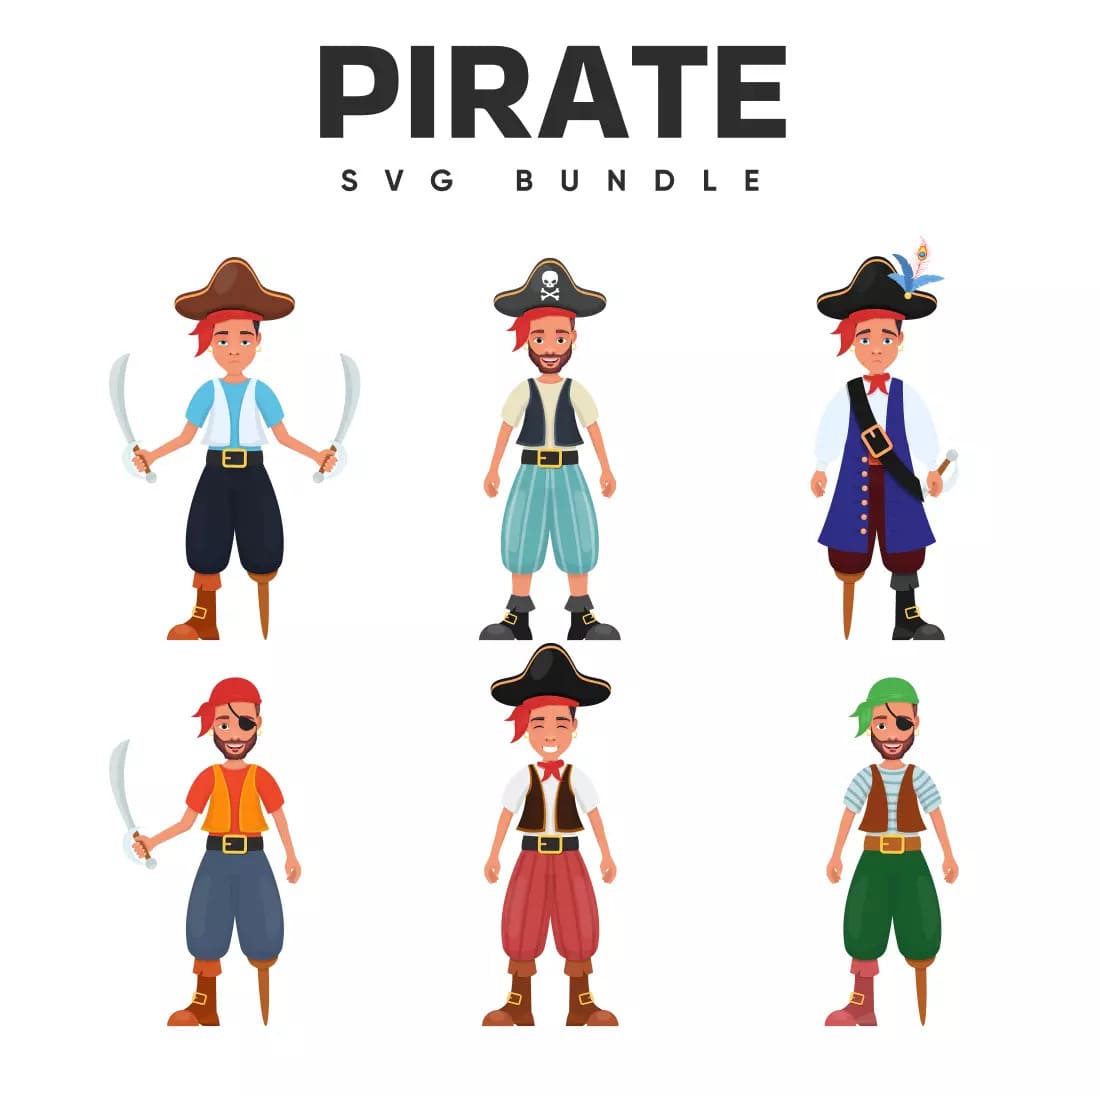 Pirate SVG Bundle Preview image.